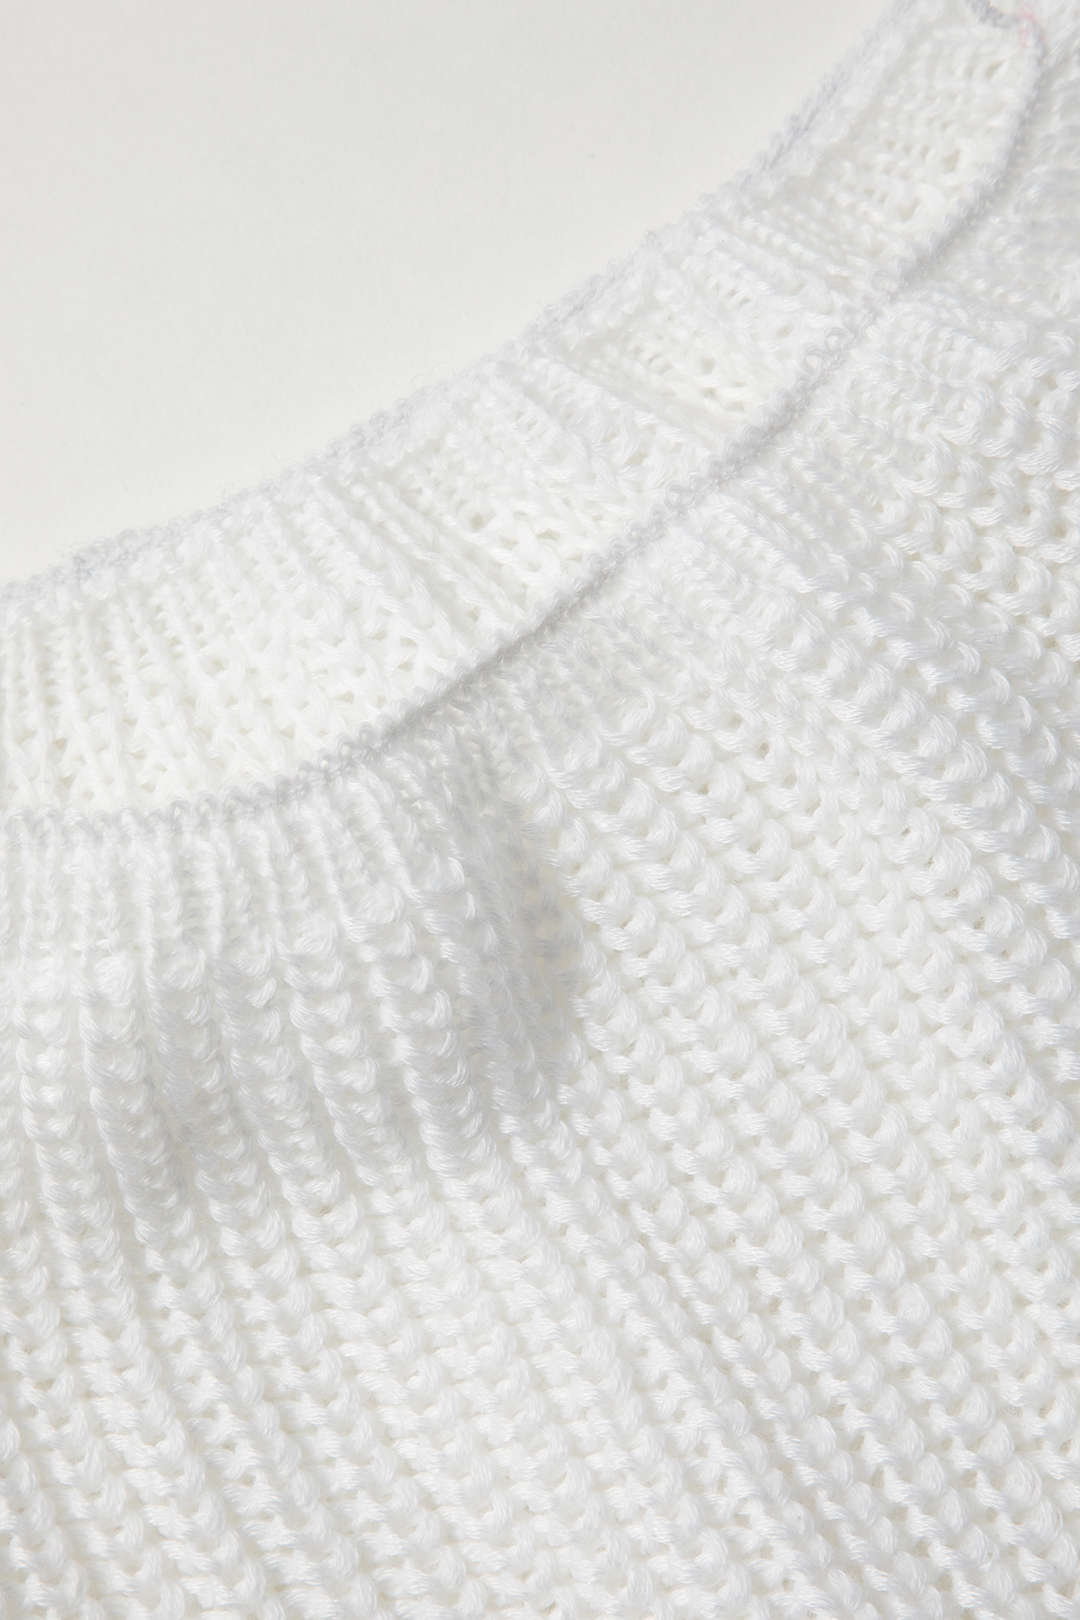 Tie Back Crochet Crop Top And Maxi Skirt Set